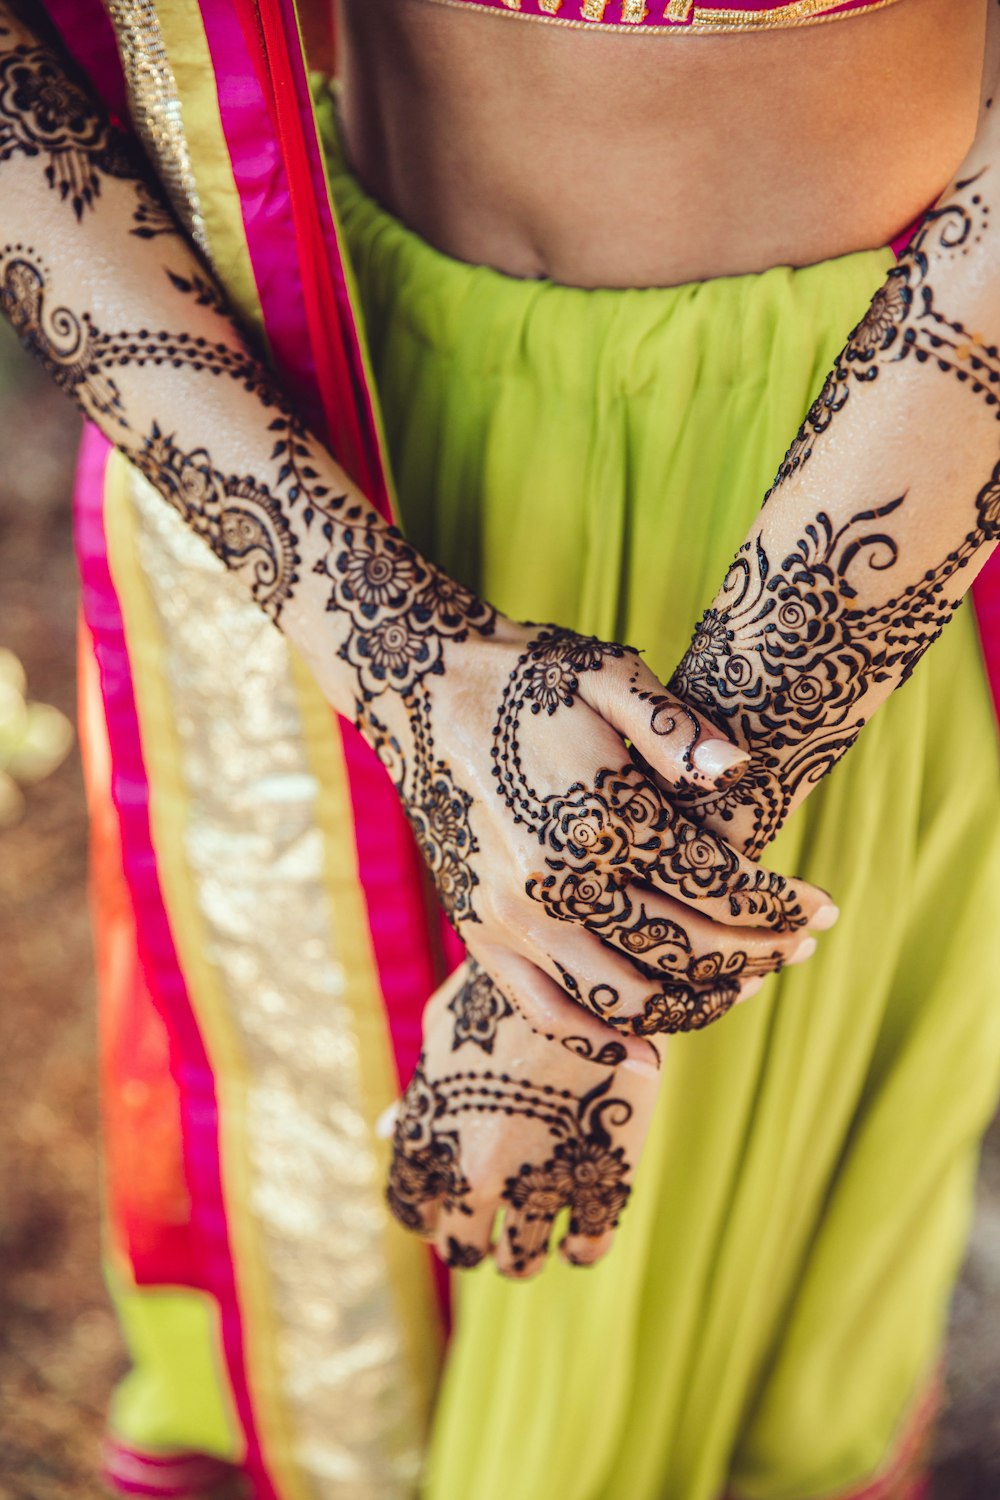 Mulher com tatuagem de Mehndi